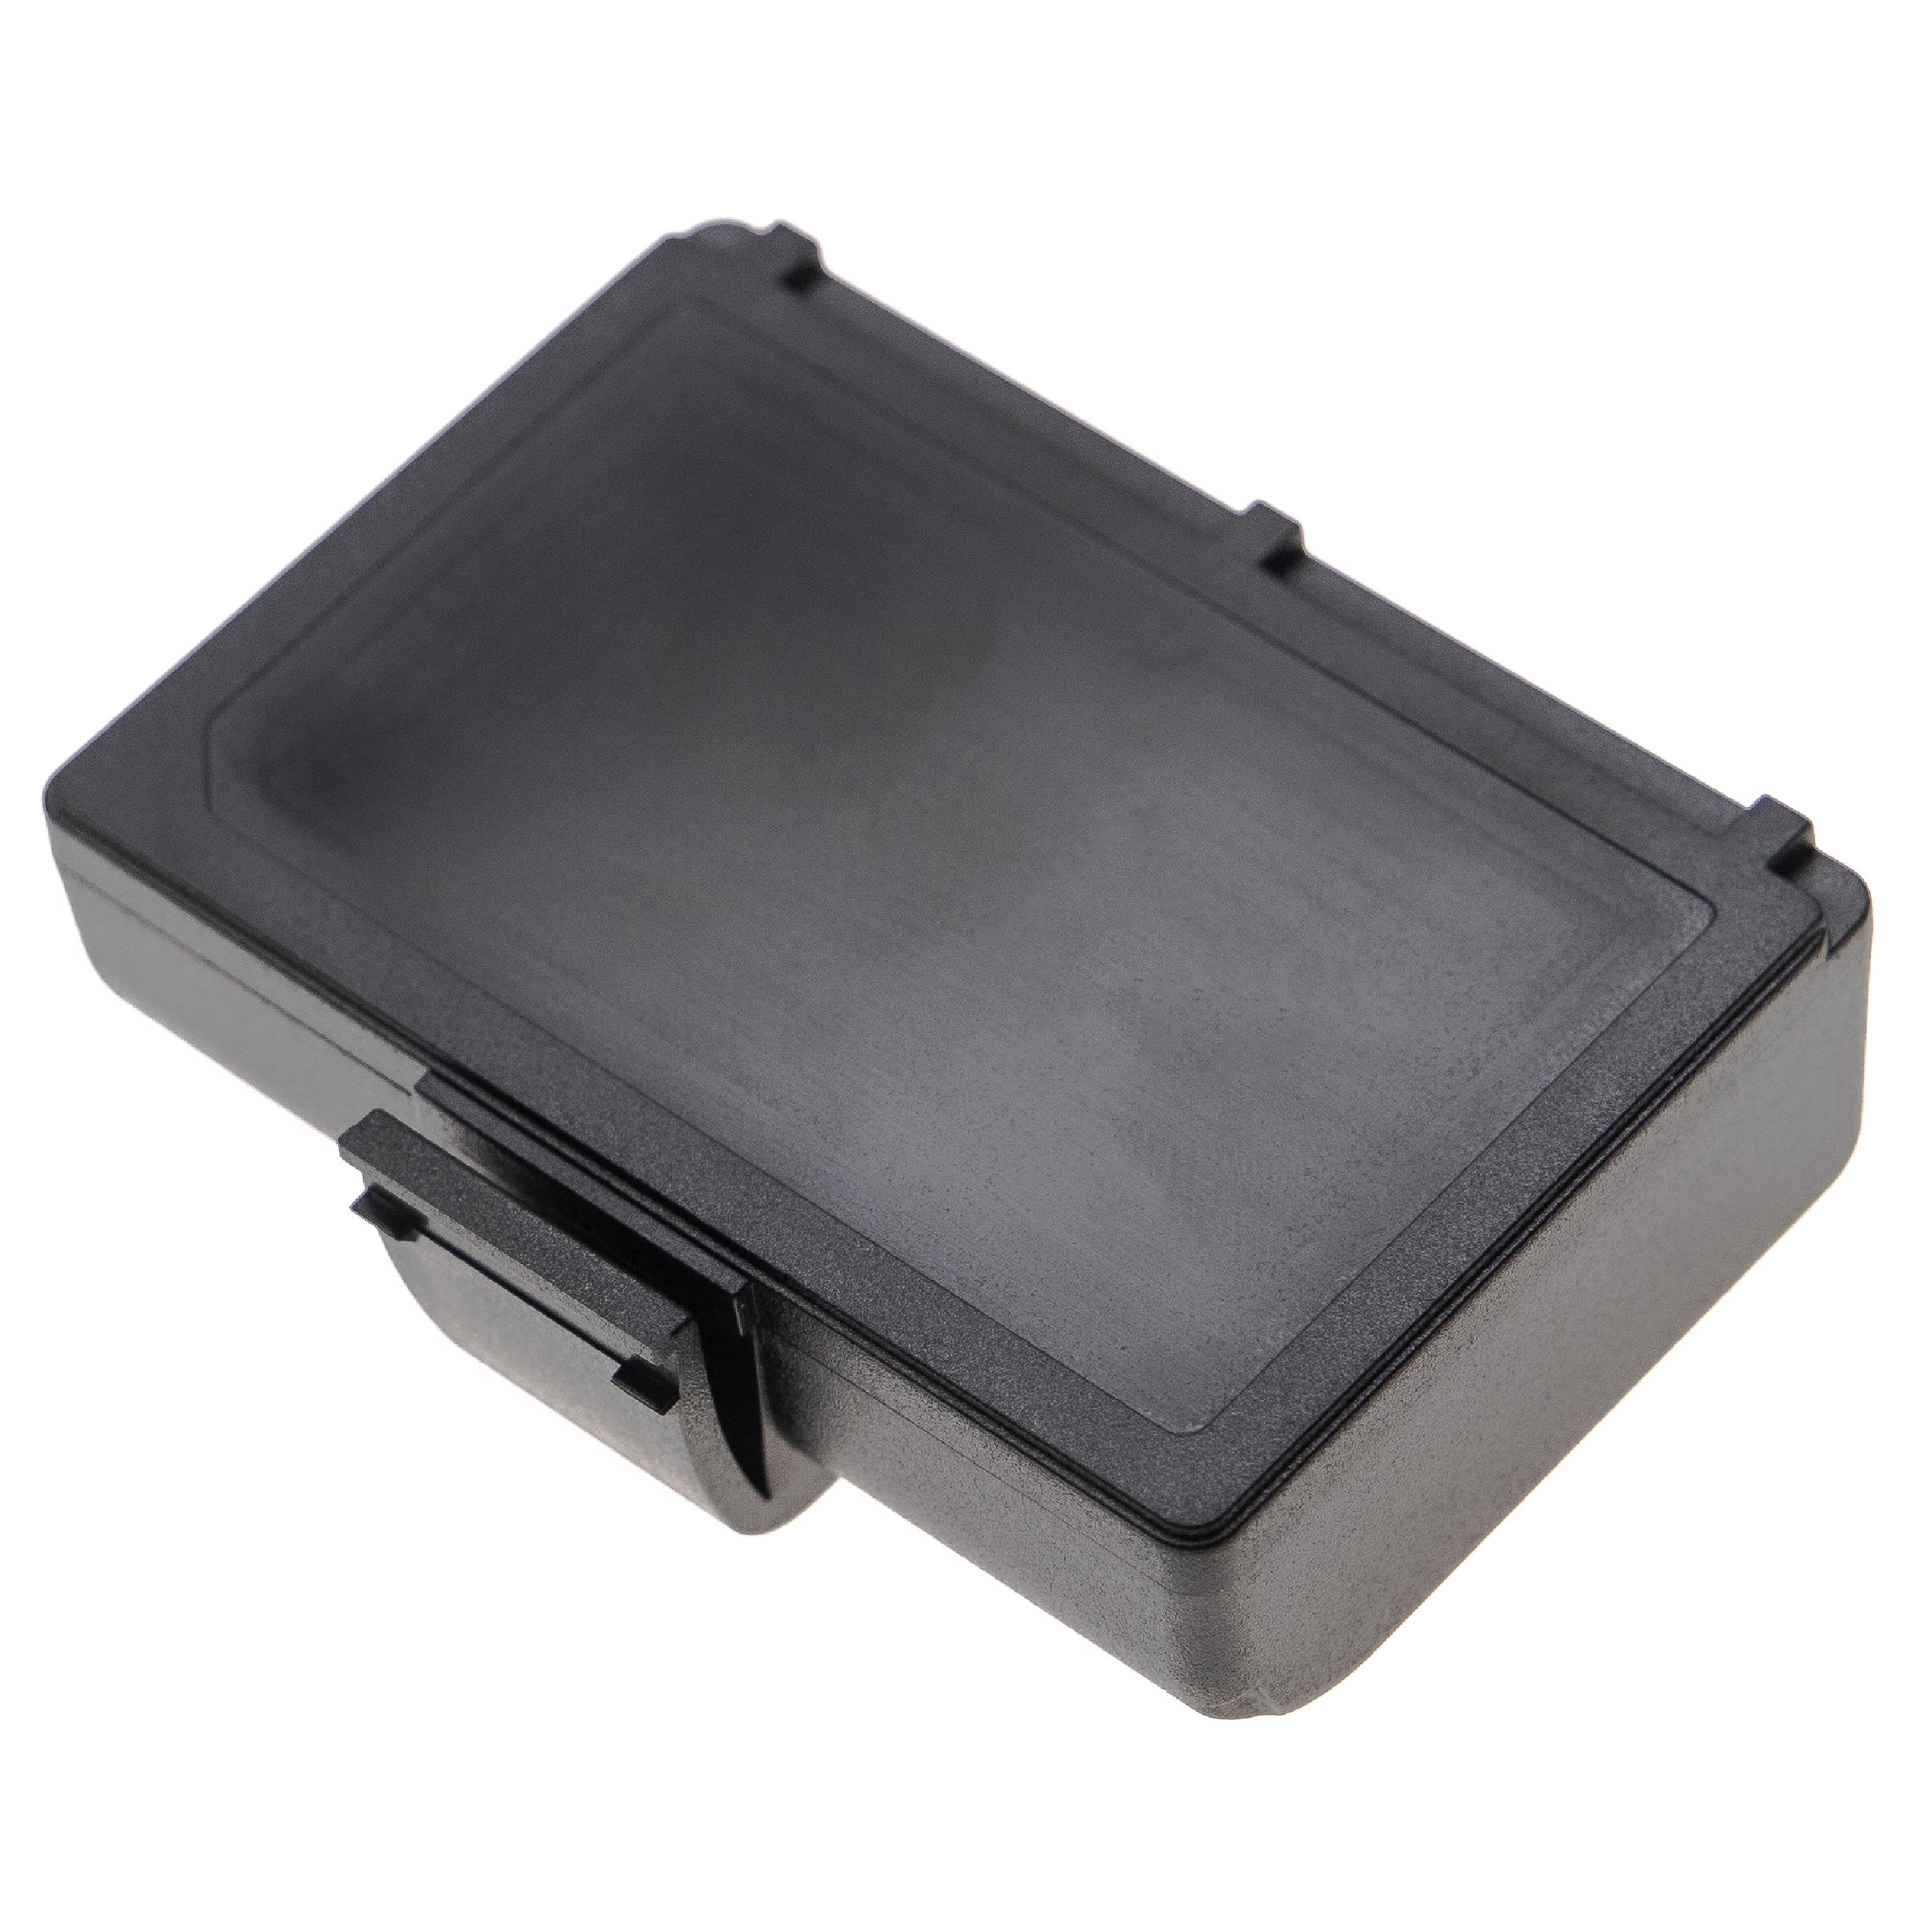 Batteria per stampante sostituisce Zebra AT16004, BTRY-MPP-34MA1-01 Zebra - 3400mAh 7,4V Li-Ion